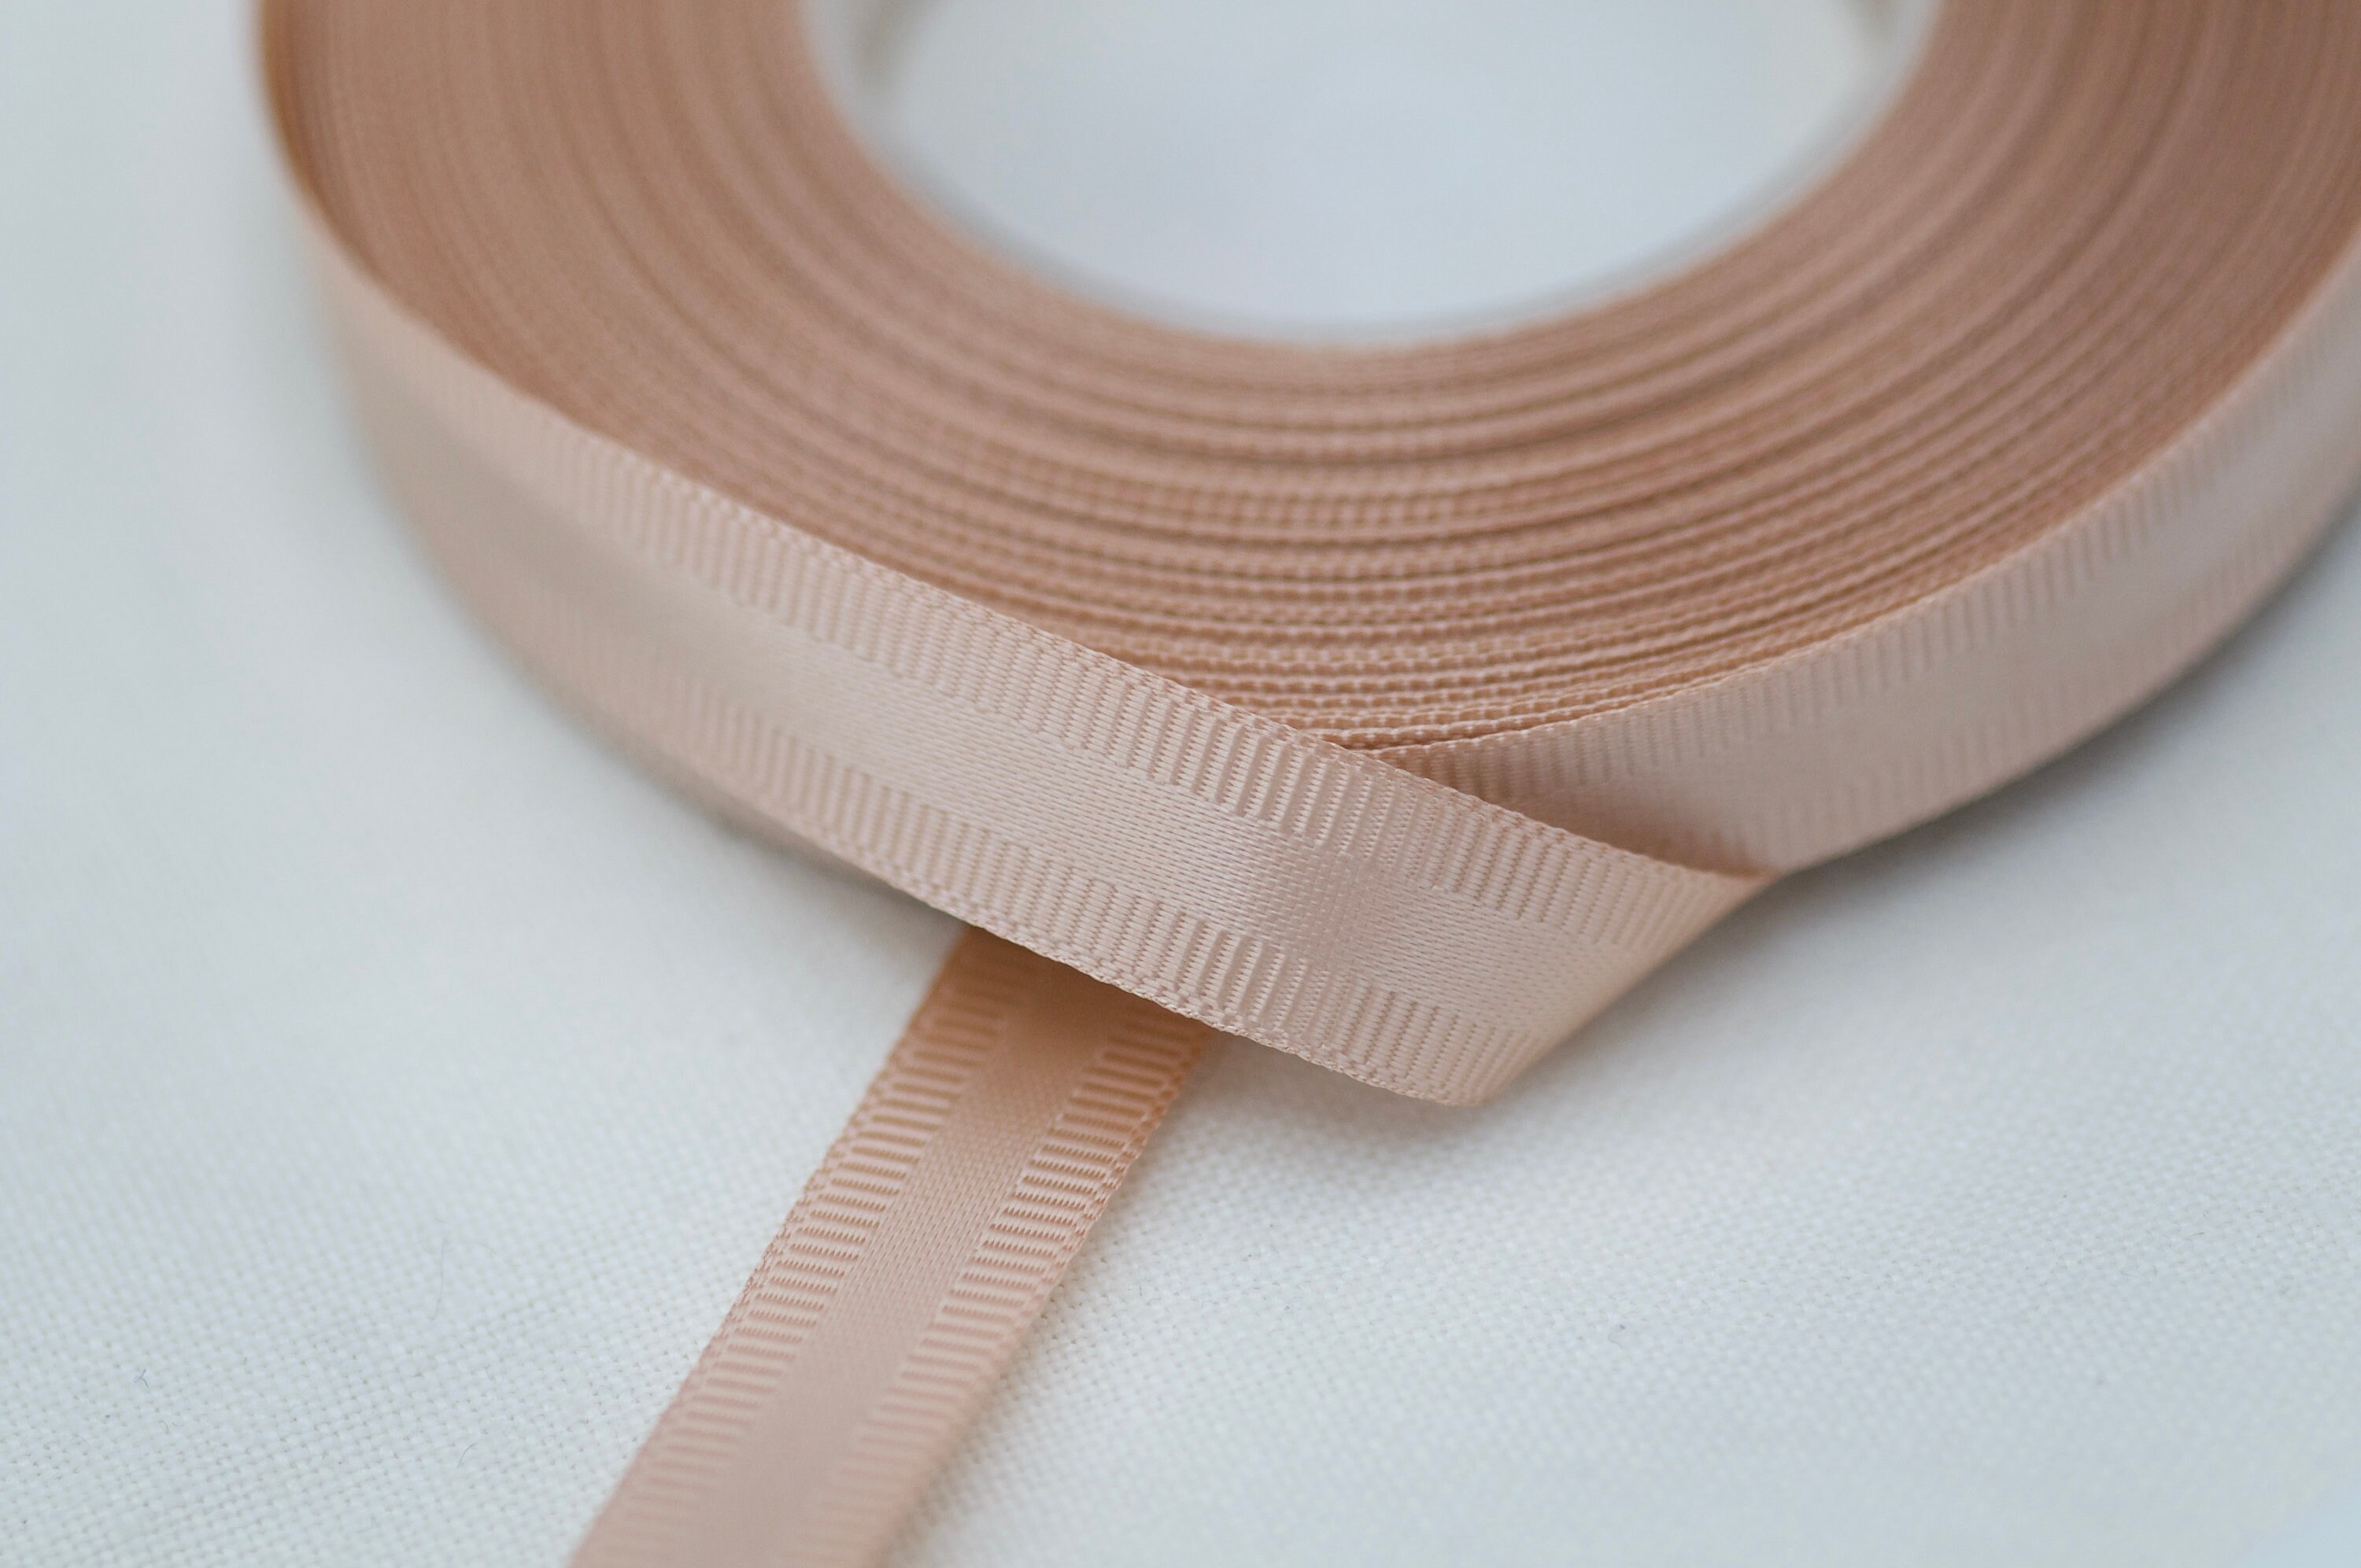 Soft Pink Ribbon 3mm Satin Ribbon 99.5 Yard Skinny Craft Ribbon